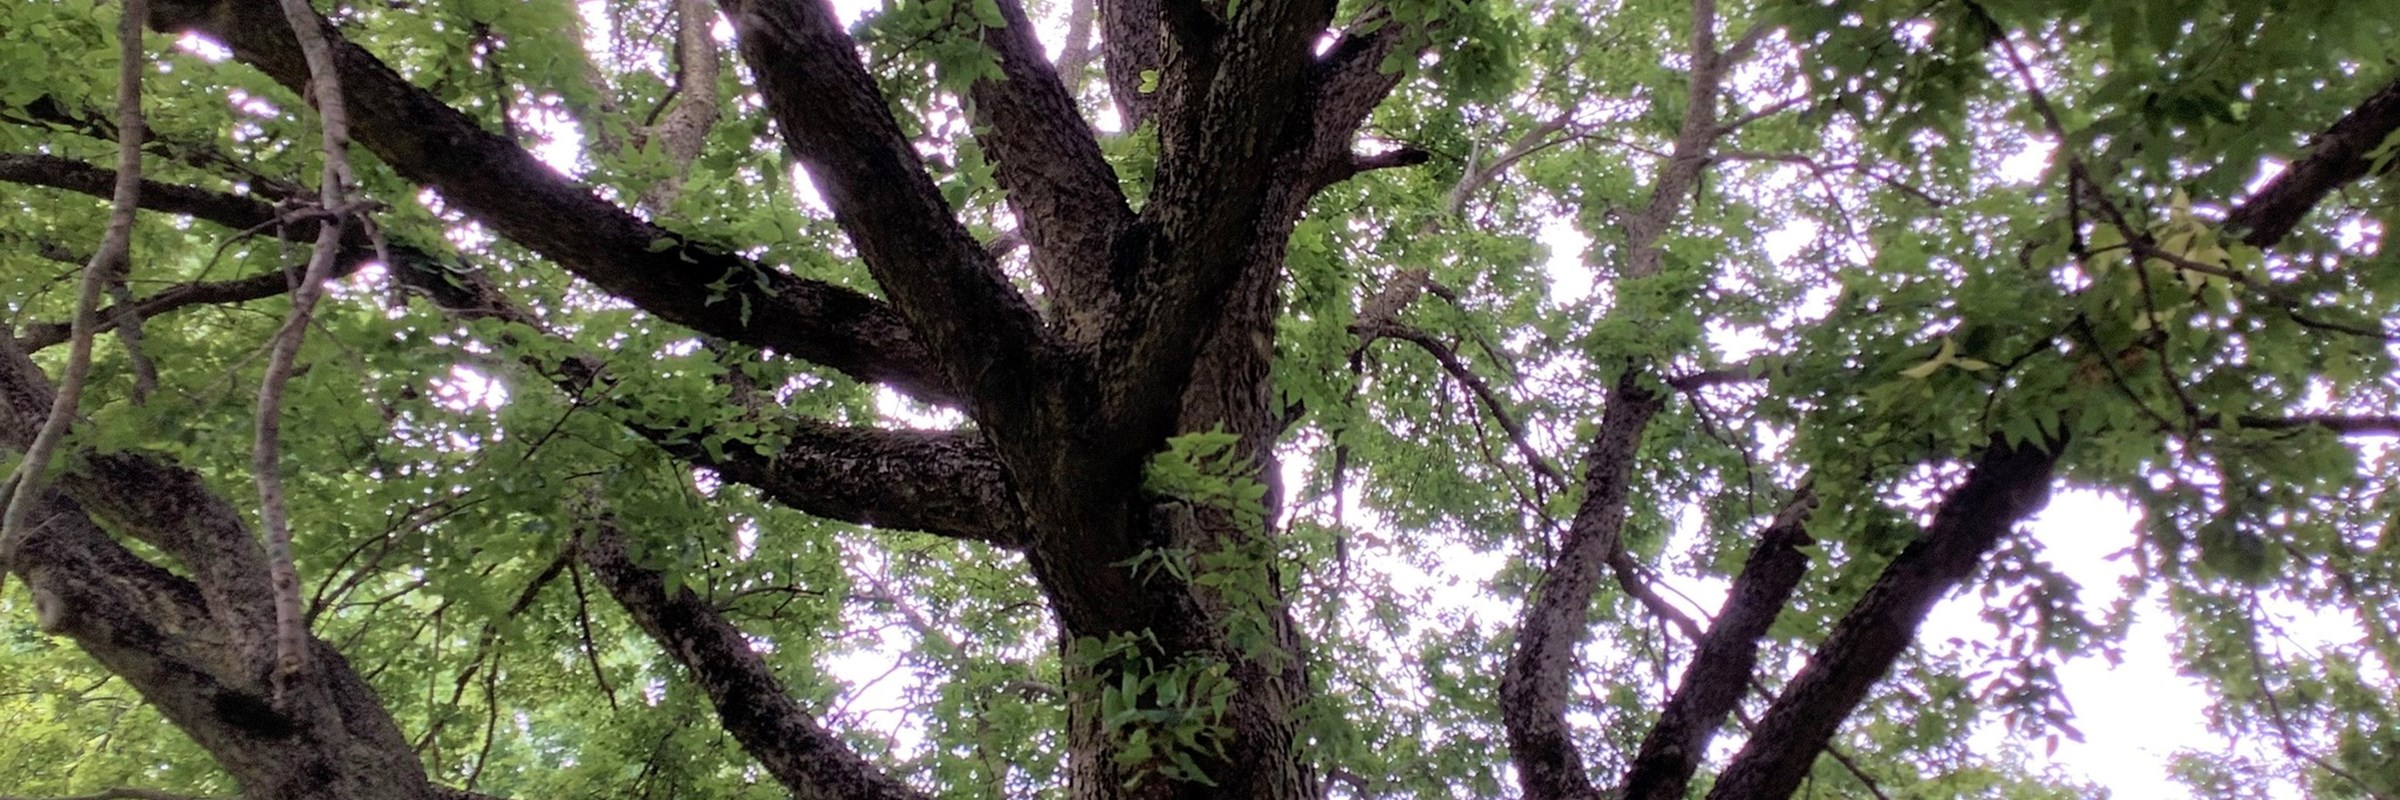 Native Illinois Tree Species